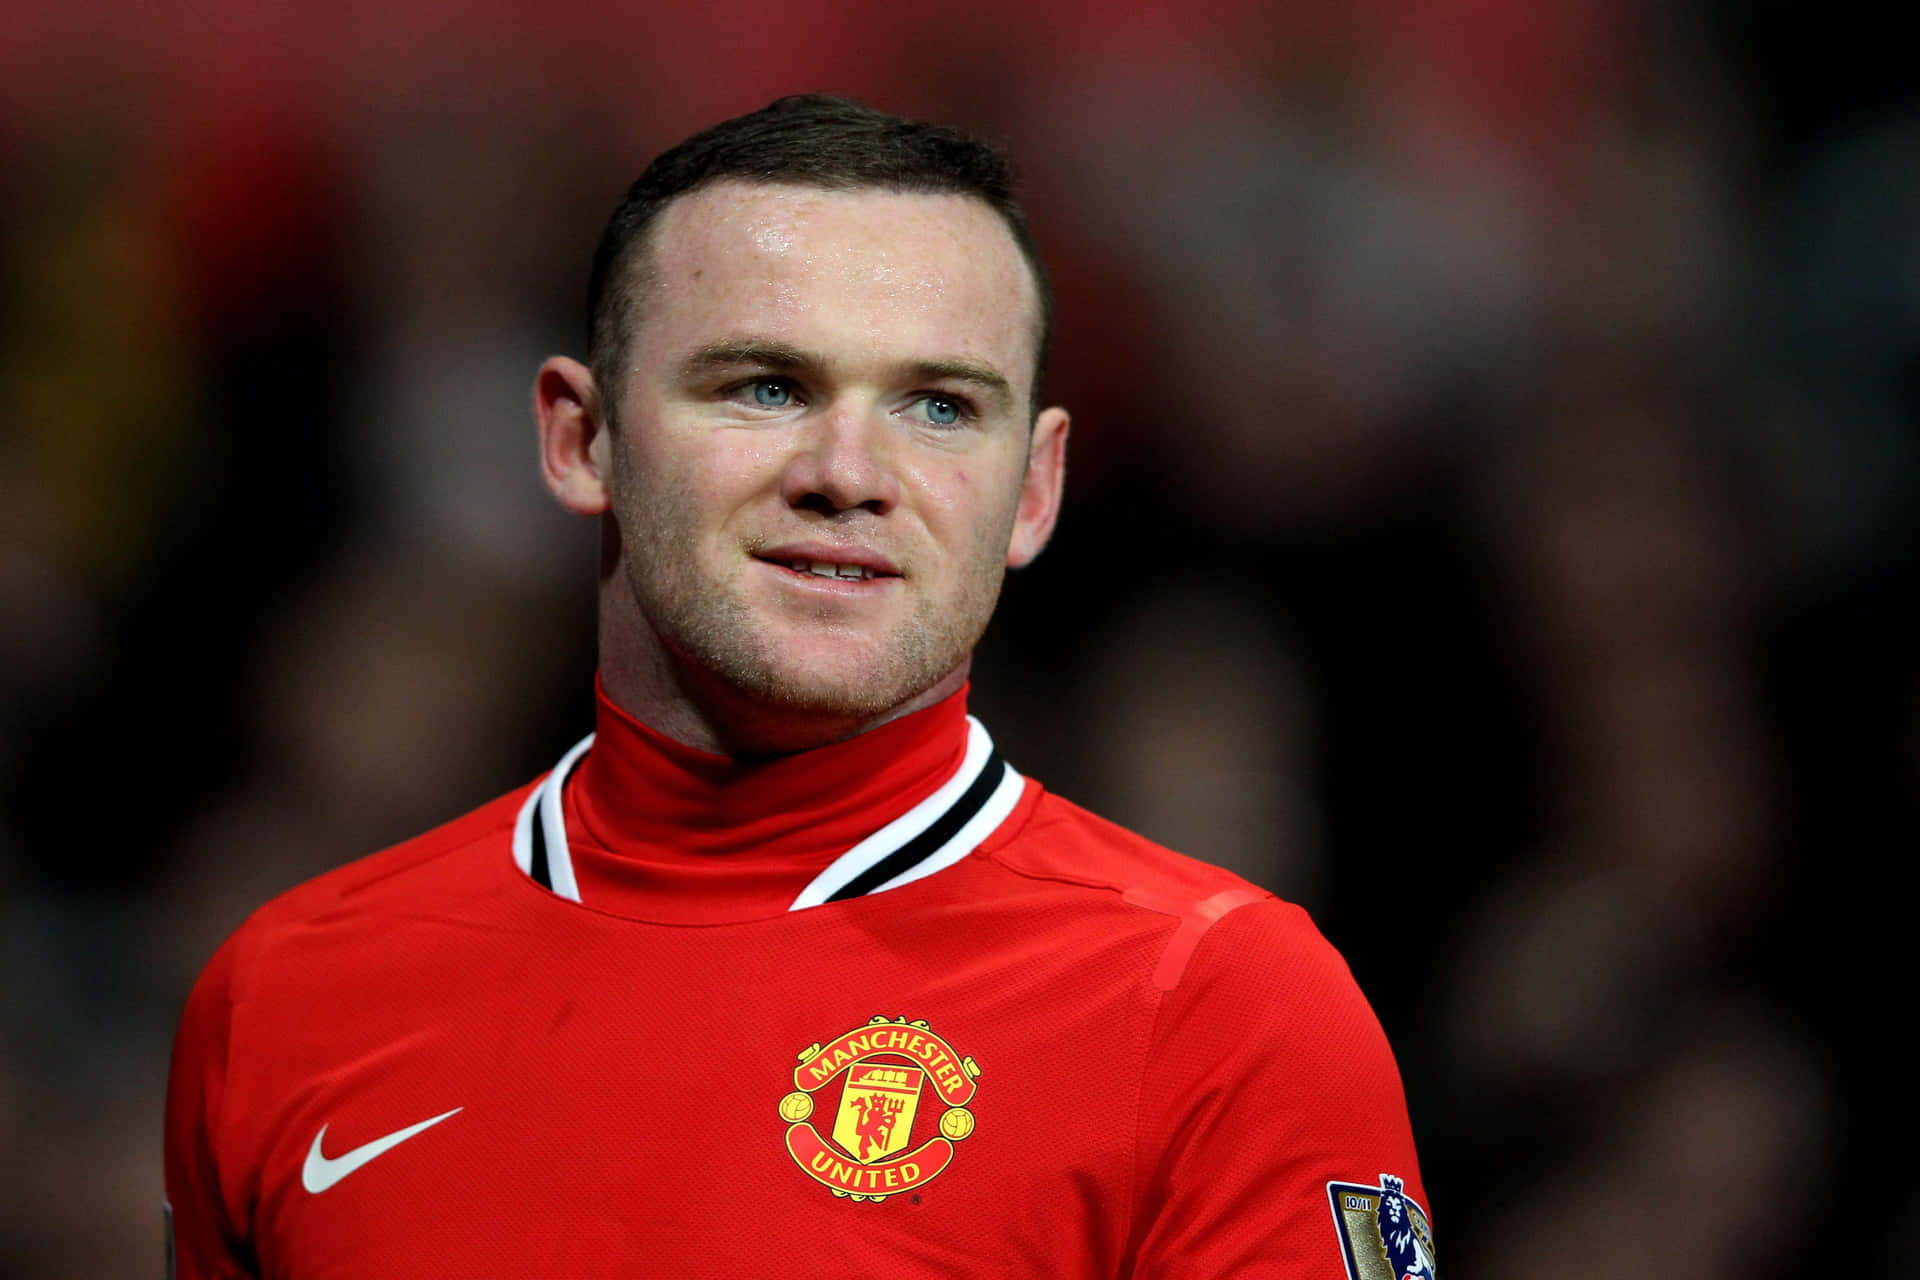 Imagende Wayne Rooney Sonriendo.